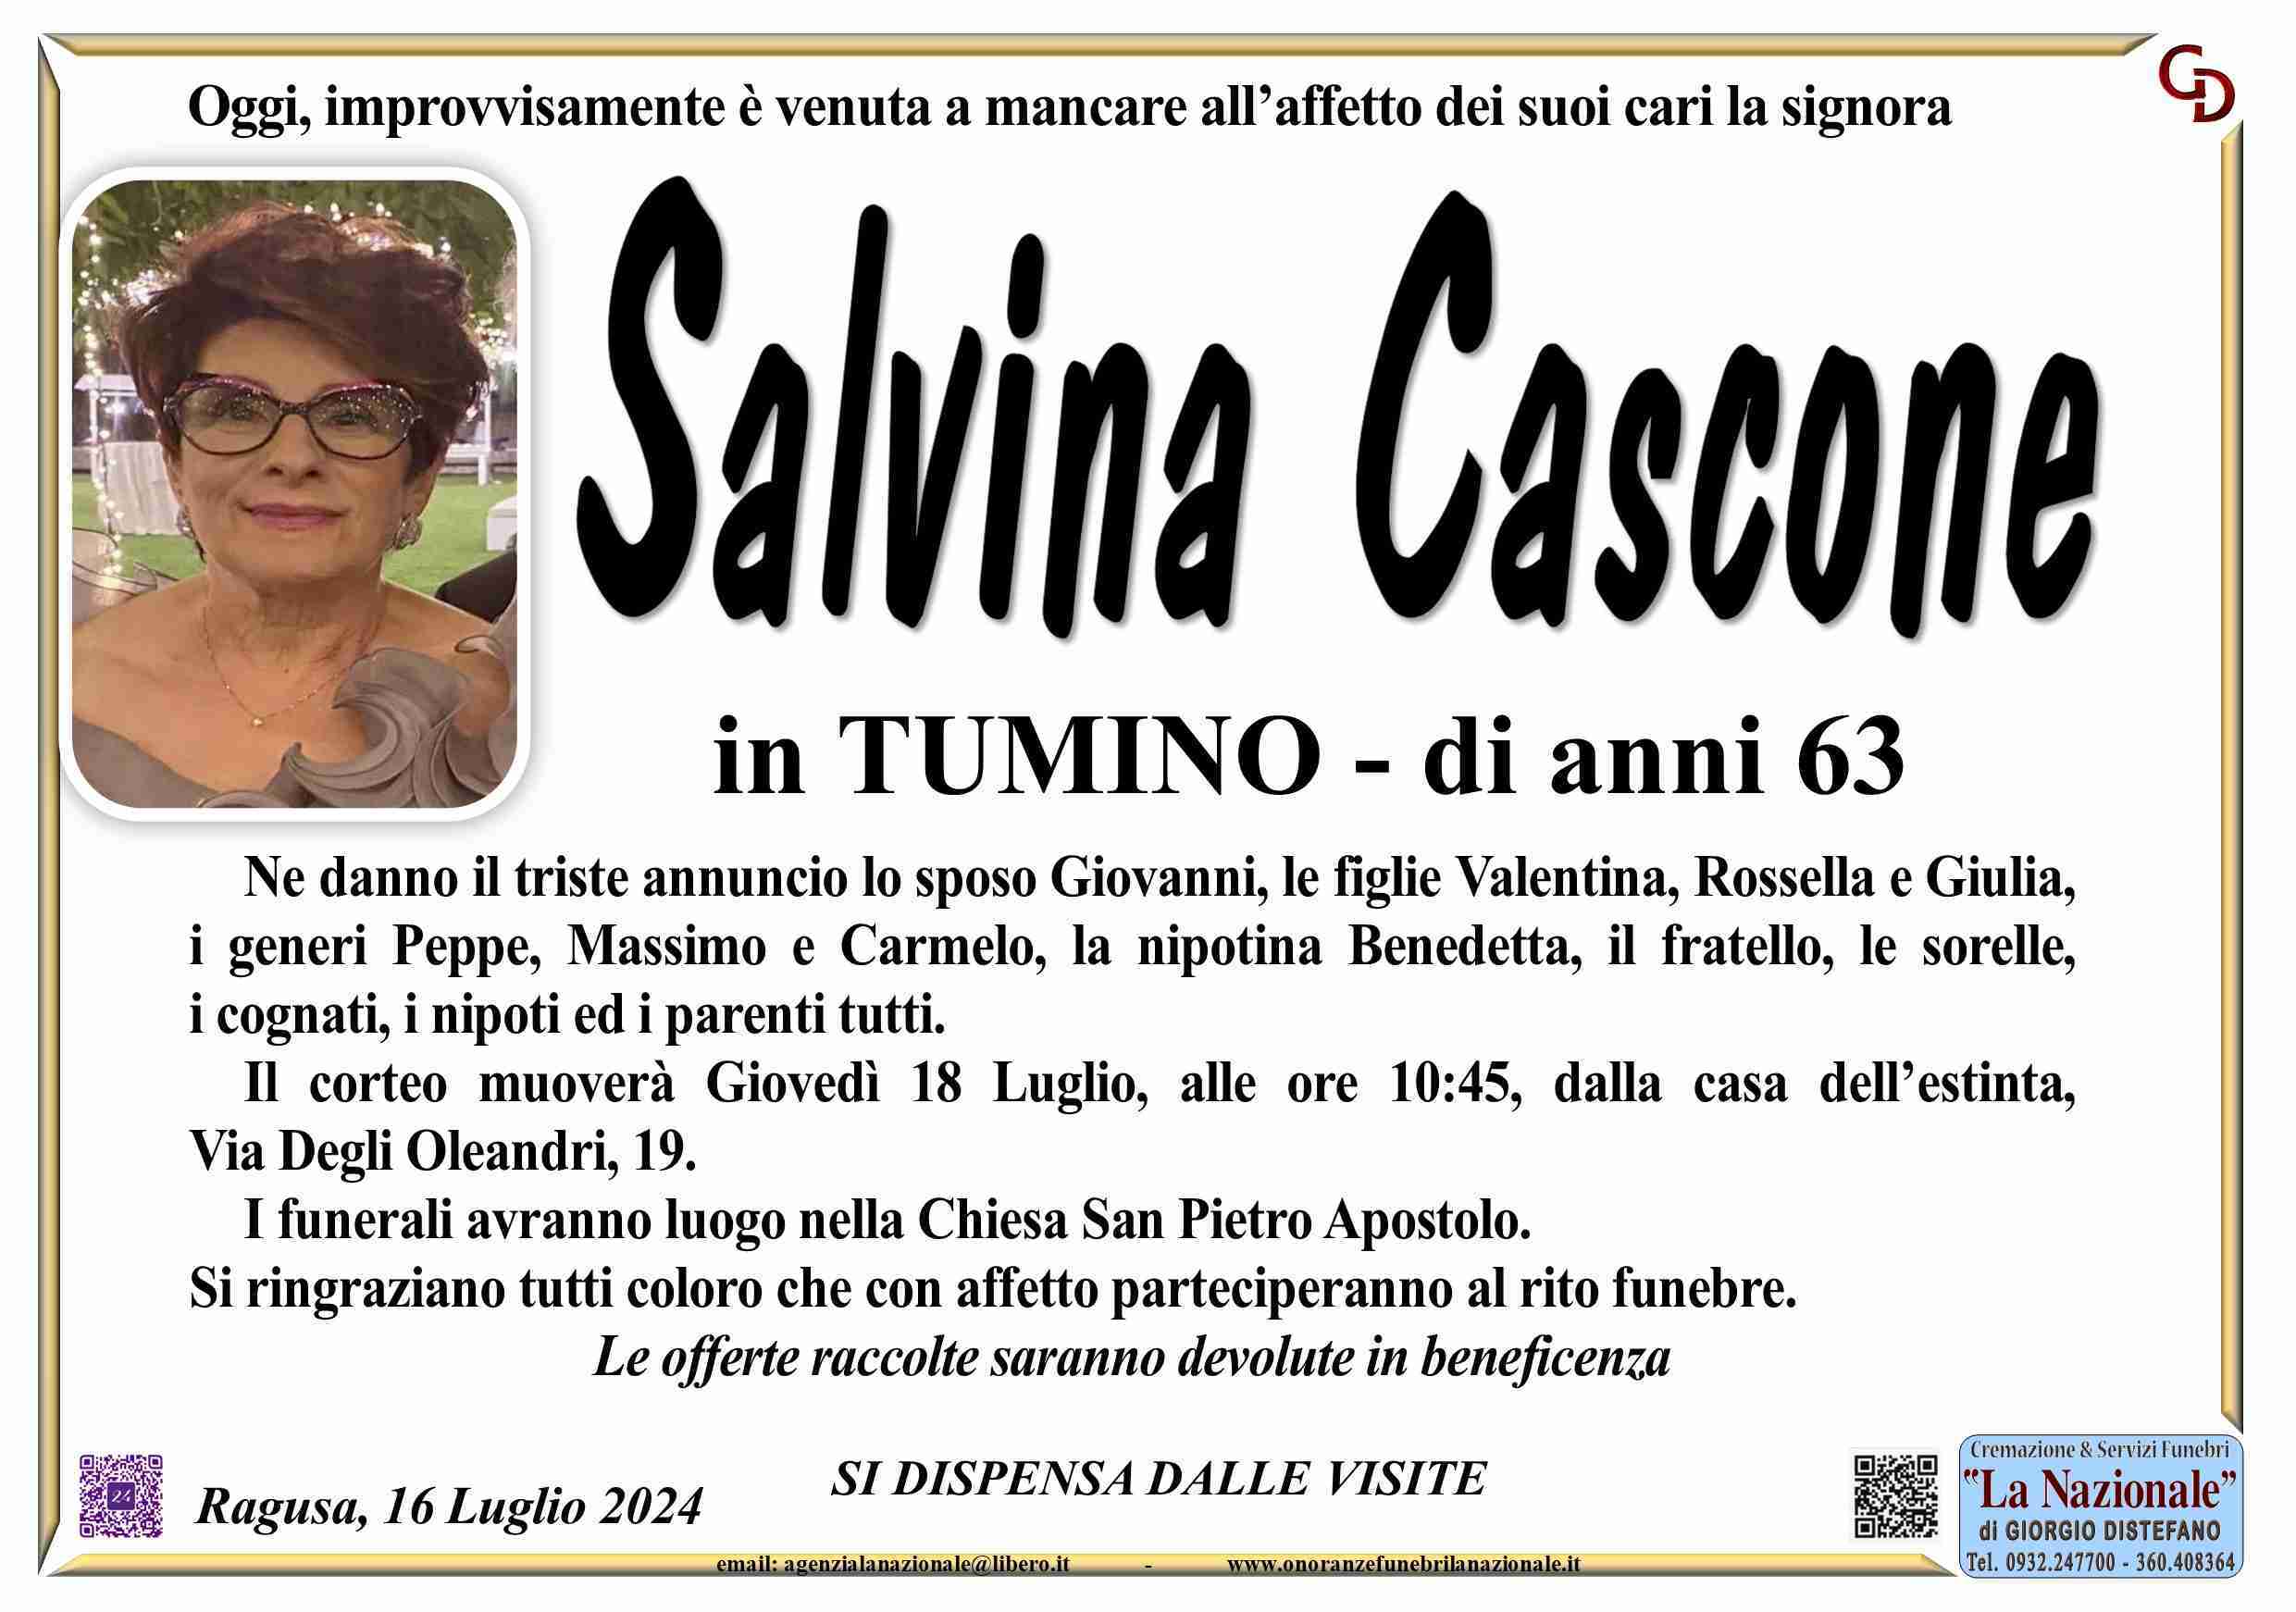 Salvina Cascone